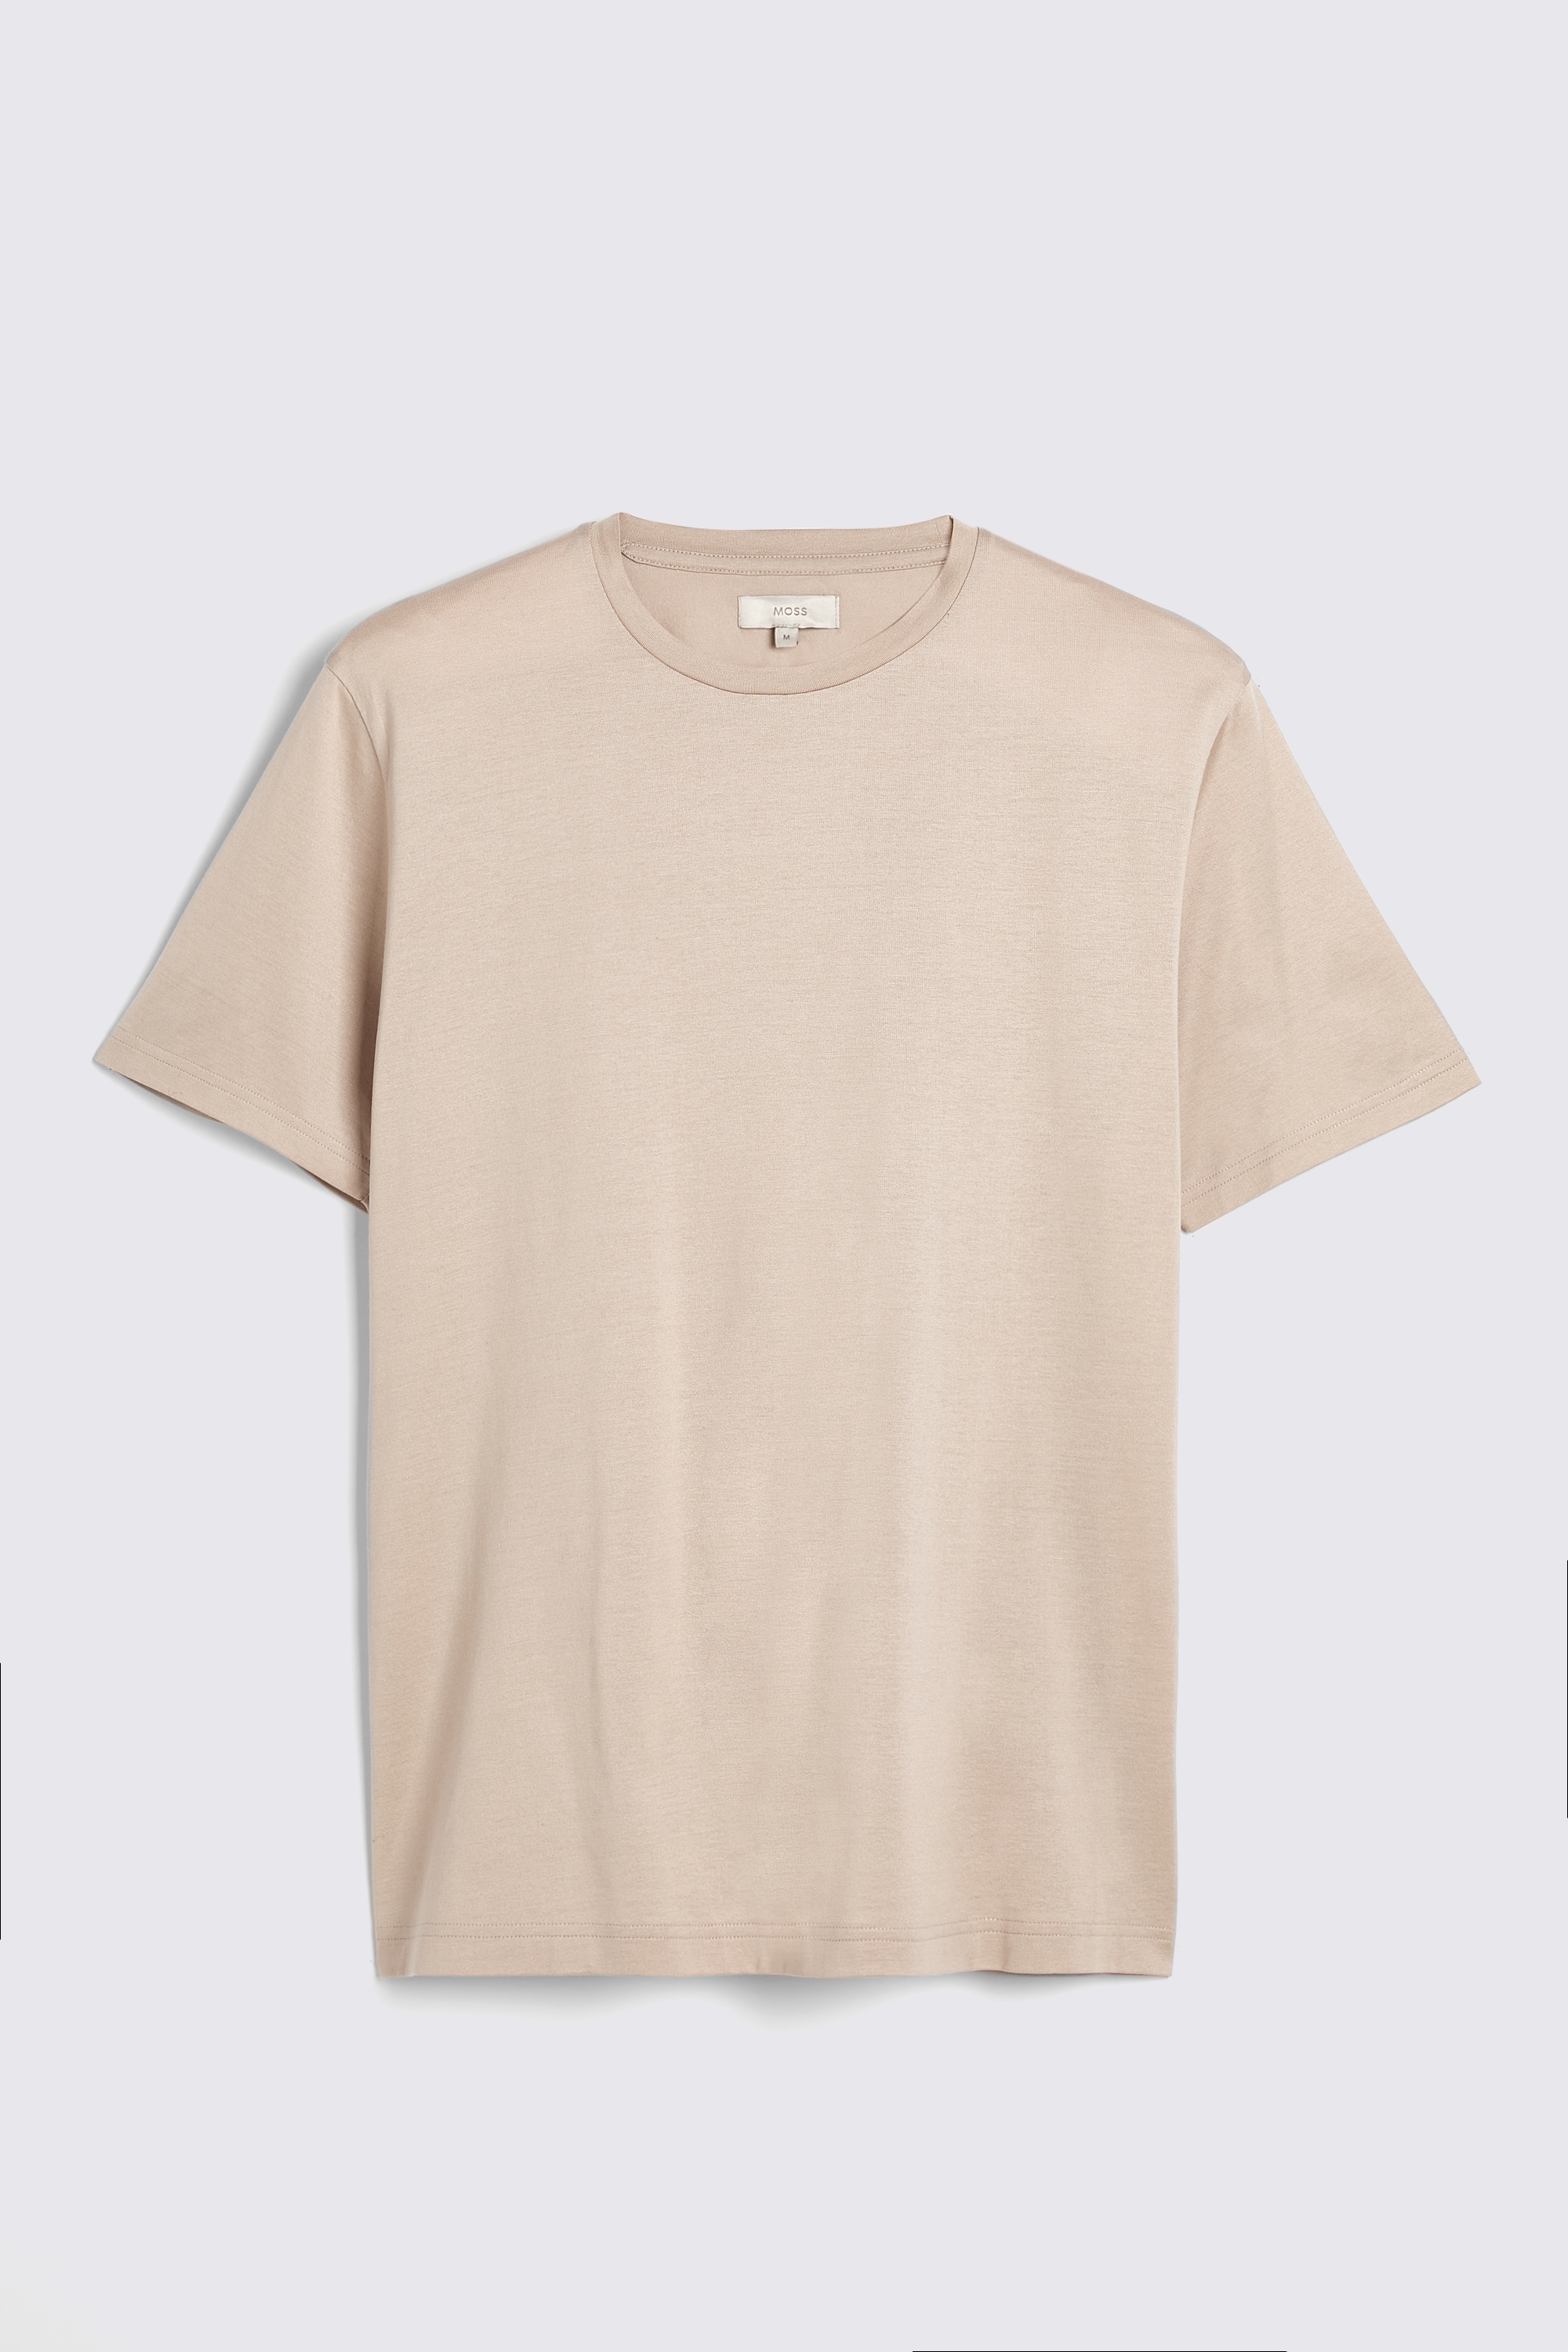 Latte Mercerised Crew Neck T-Shirt | Buy Online at Moss